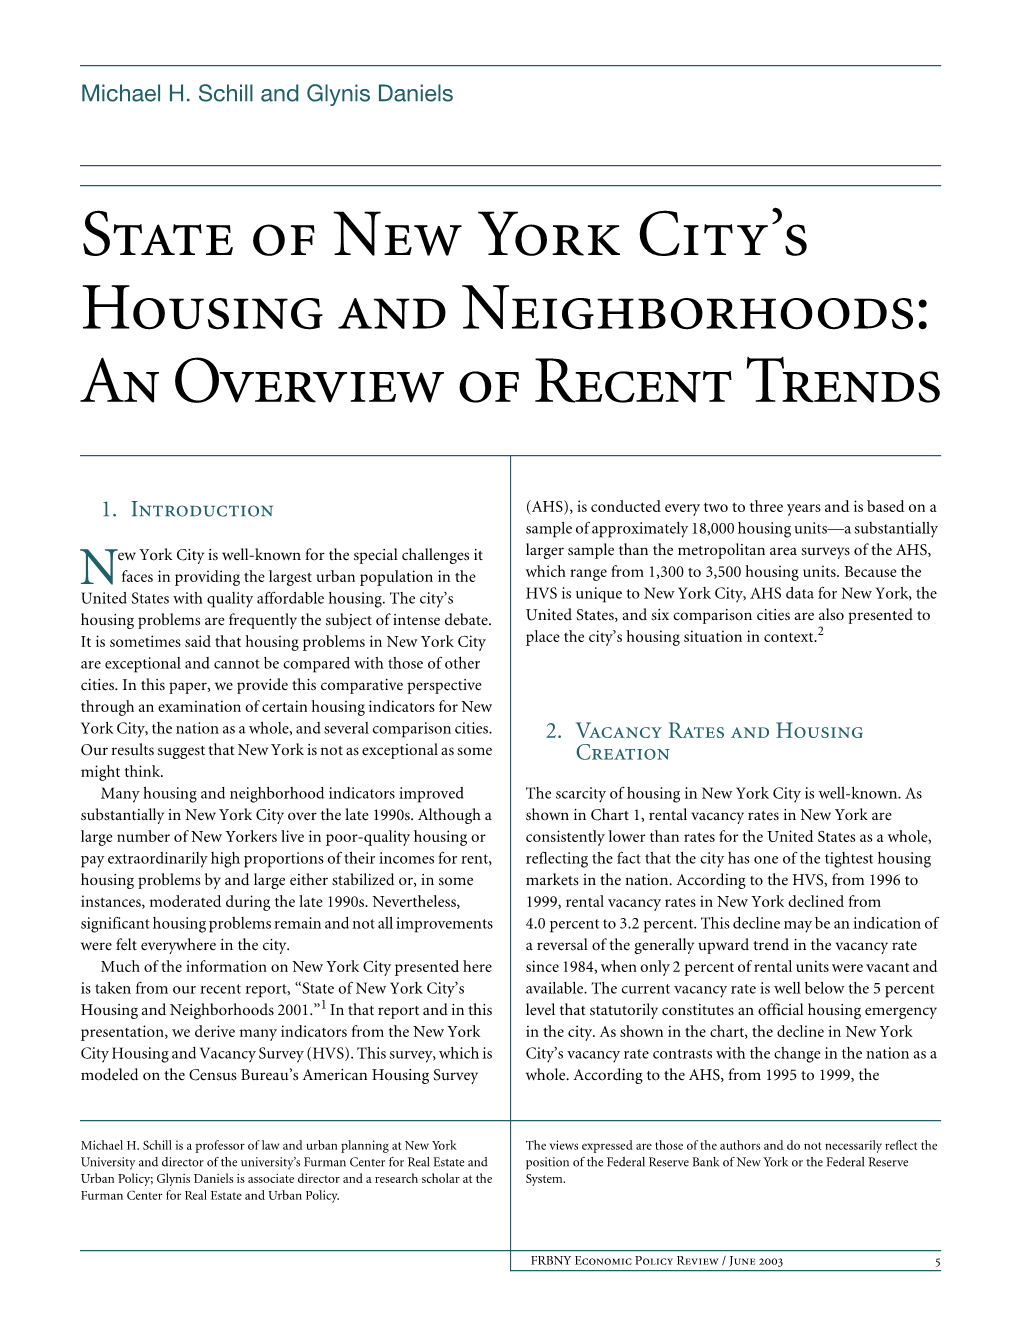 State of New York City's Housing and Neighborhoods